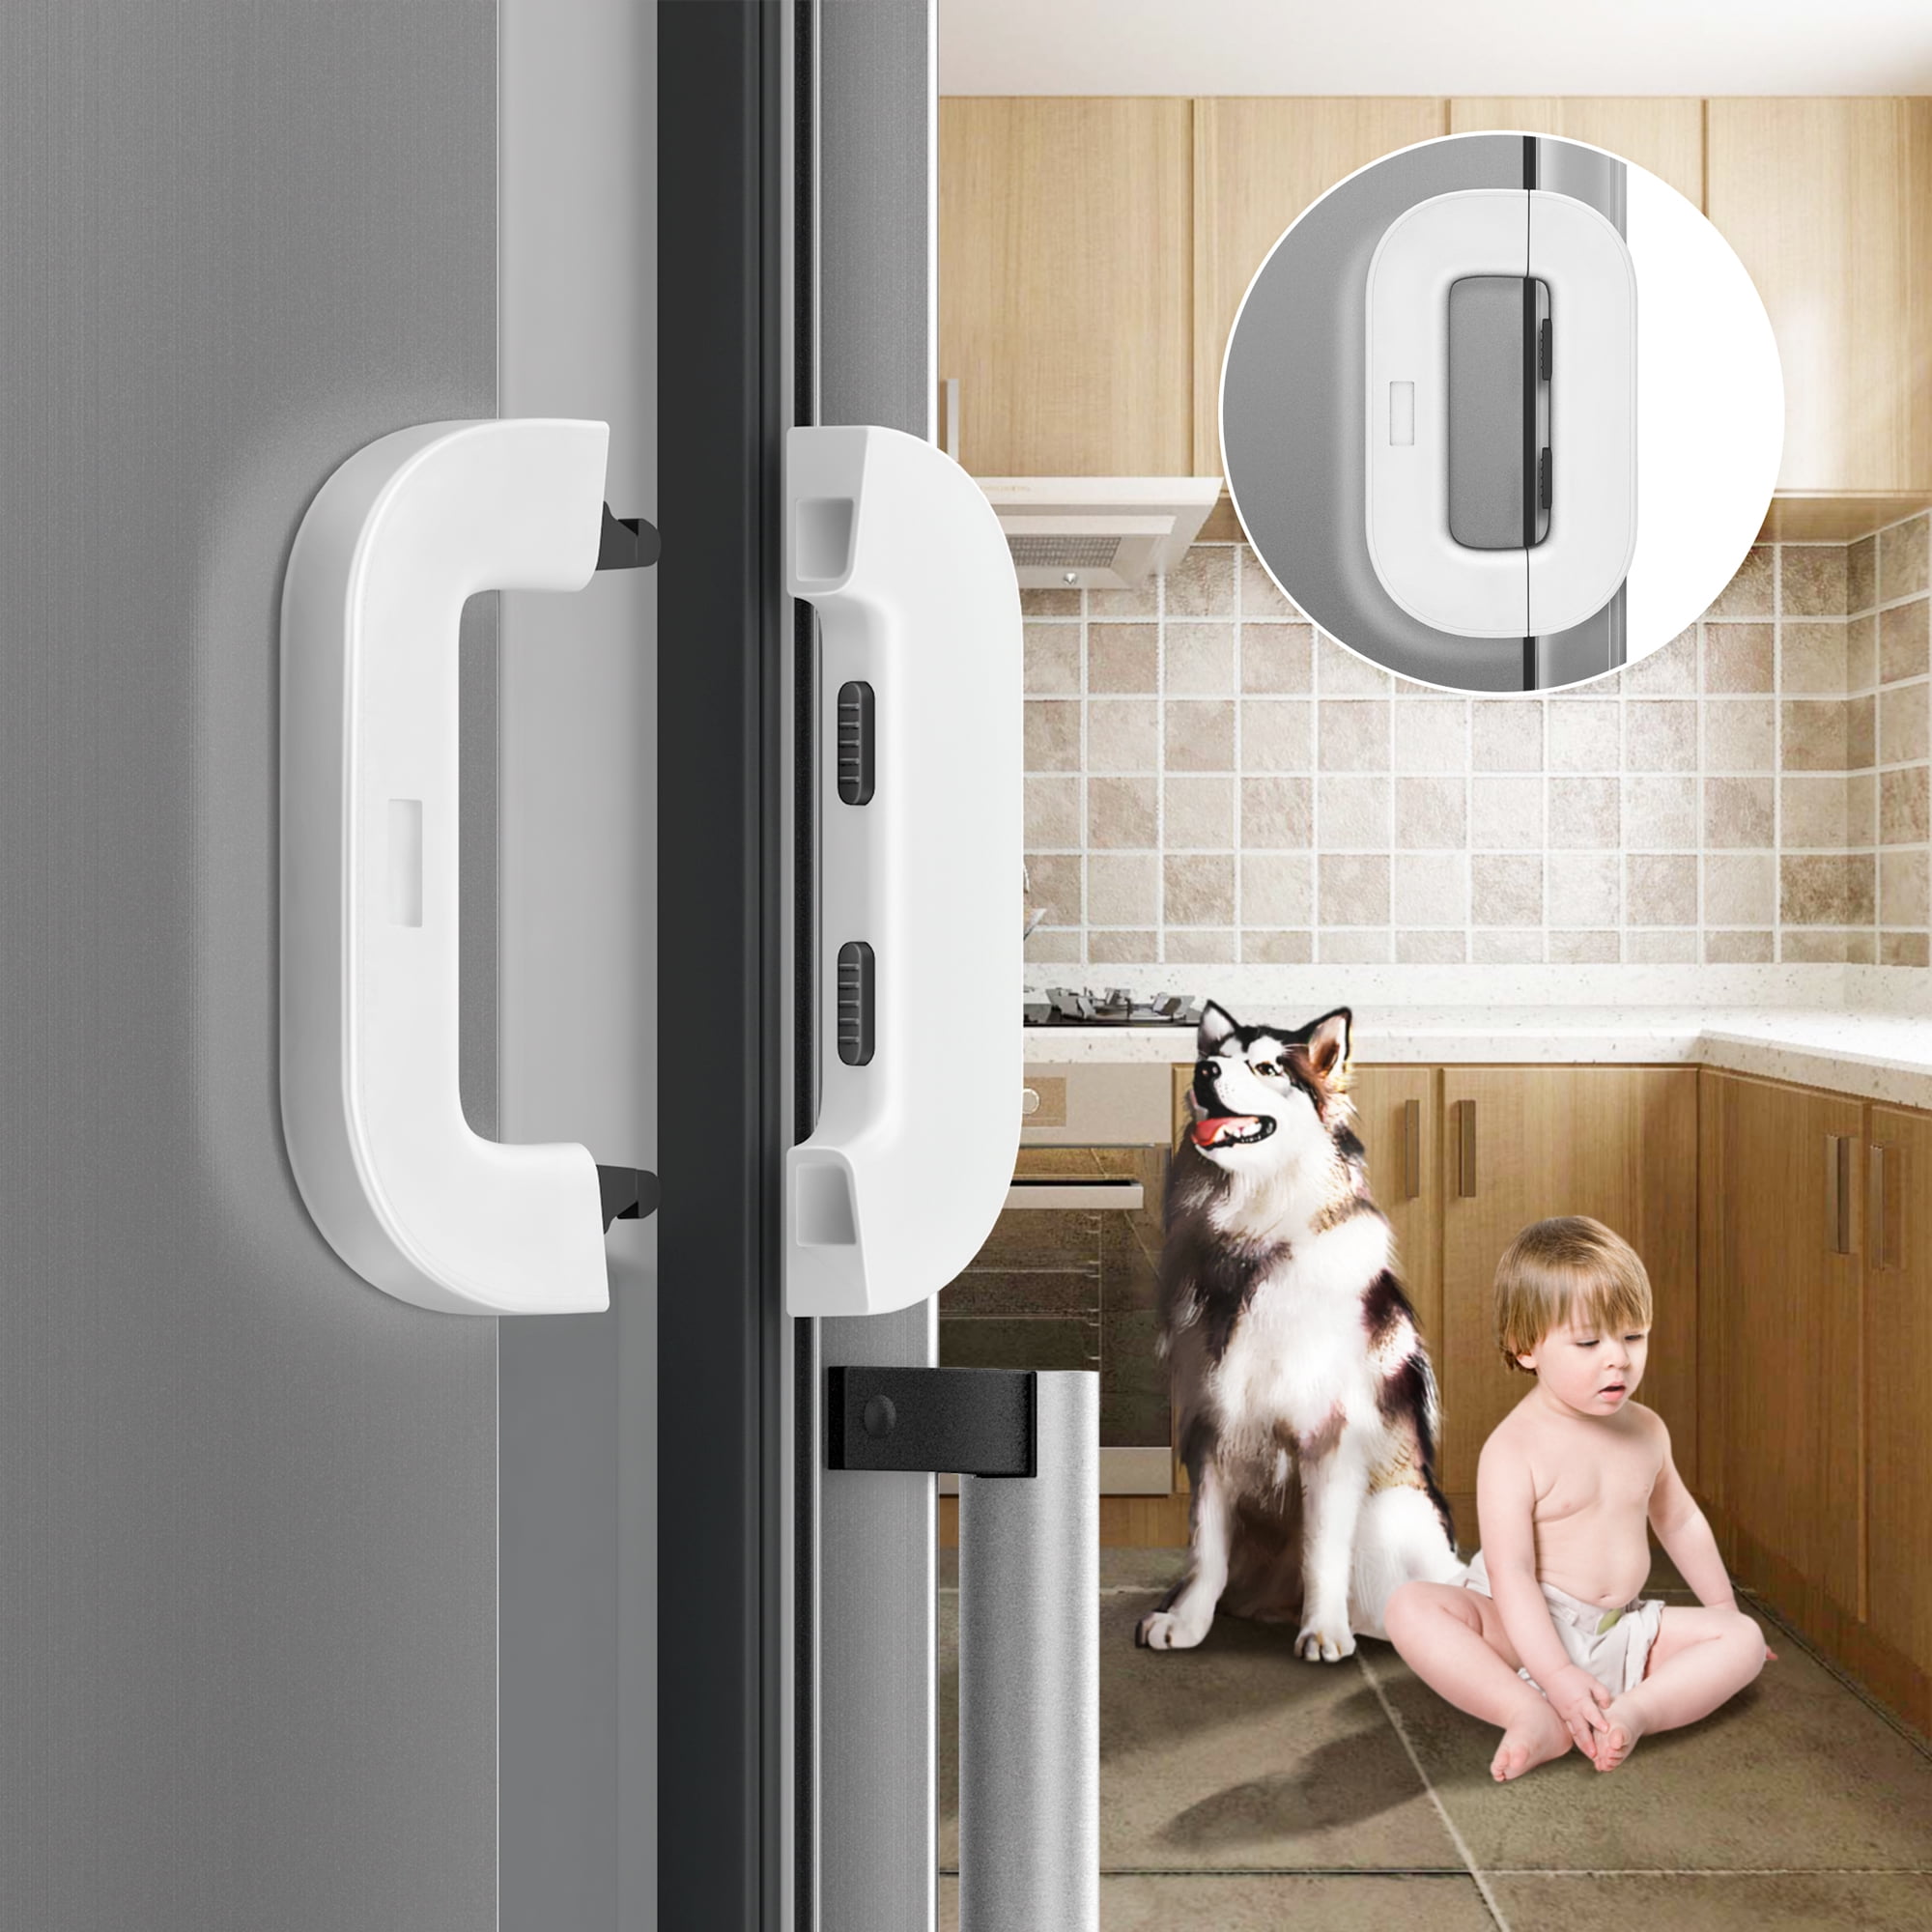 5 Pack Refrigerator Door Lock, Mini Fridge Lock Child Safety, Child Proof Cabinet  Locks, Fits Perfectly